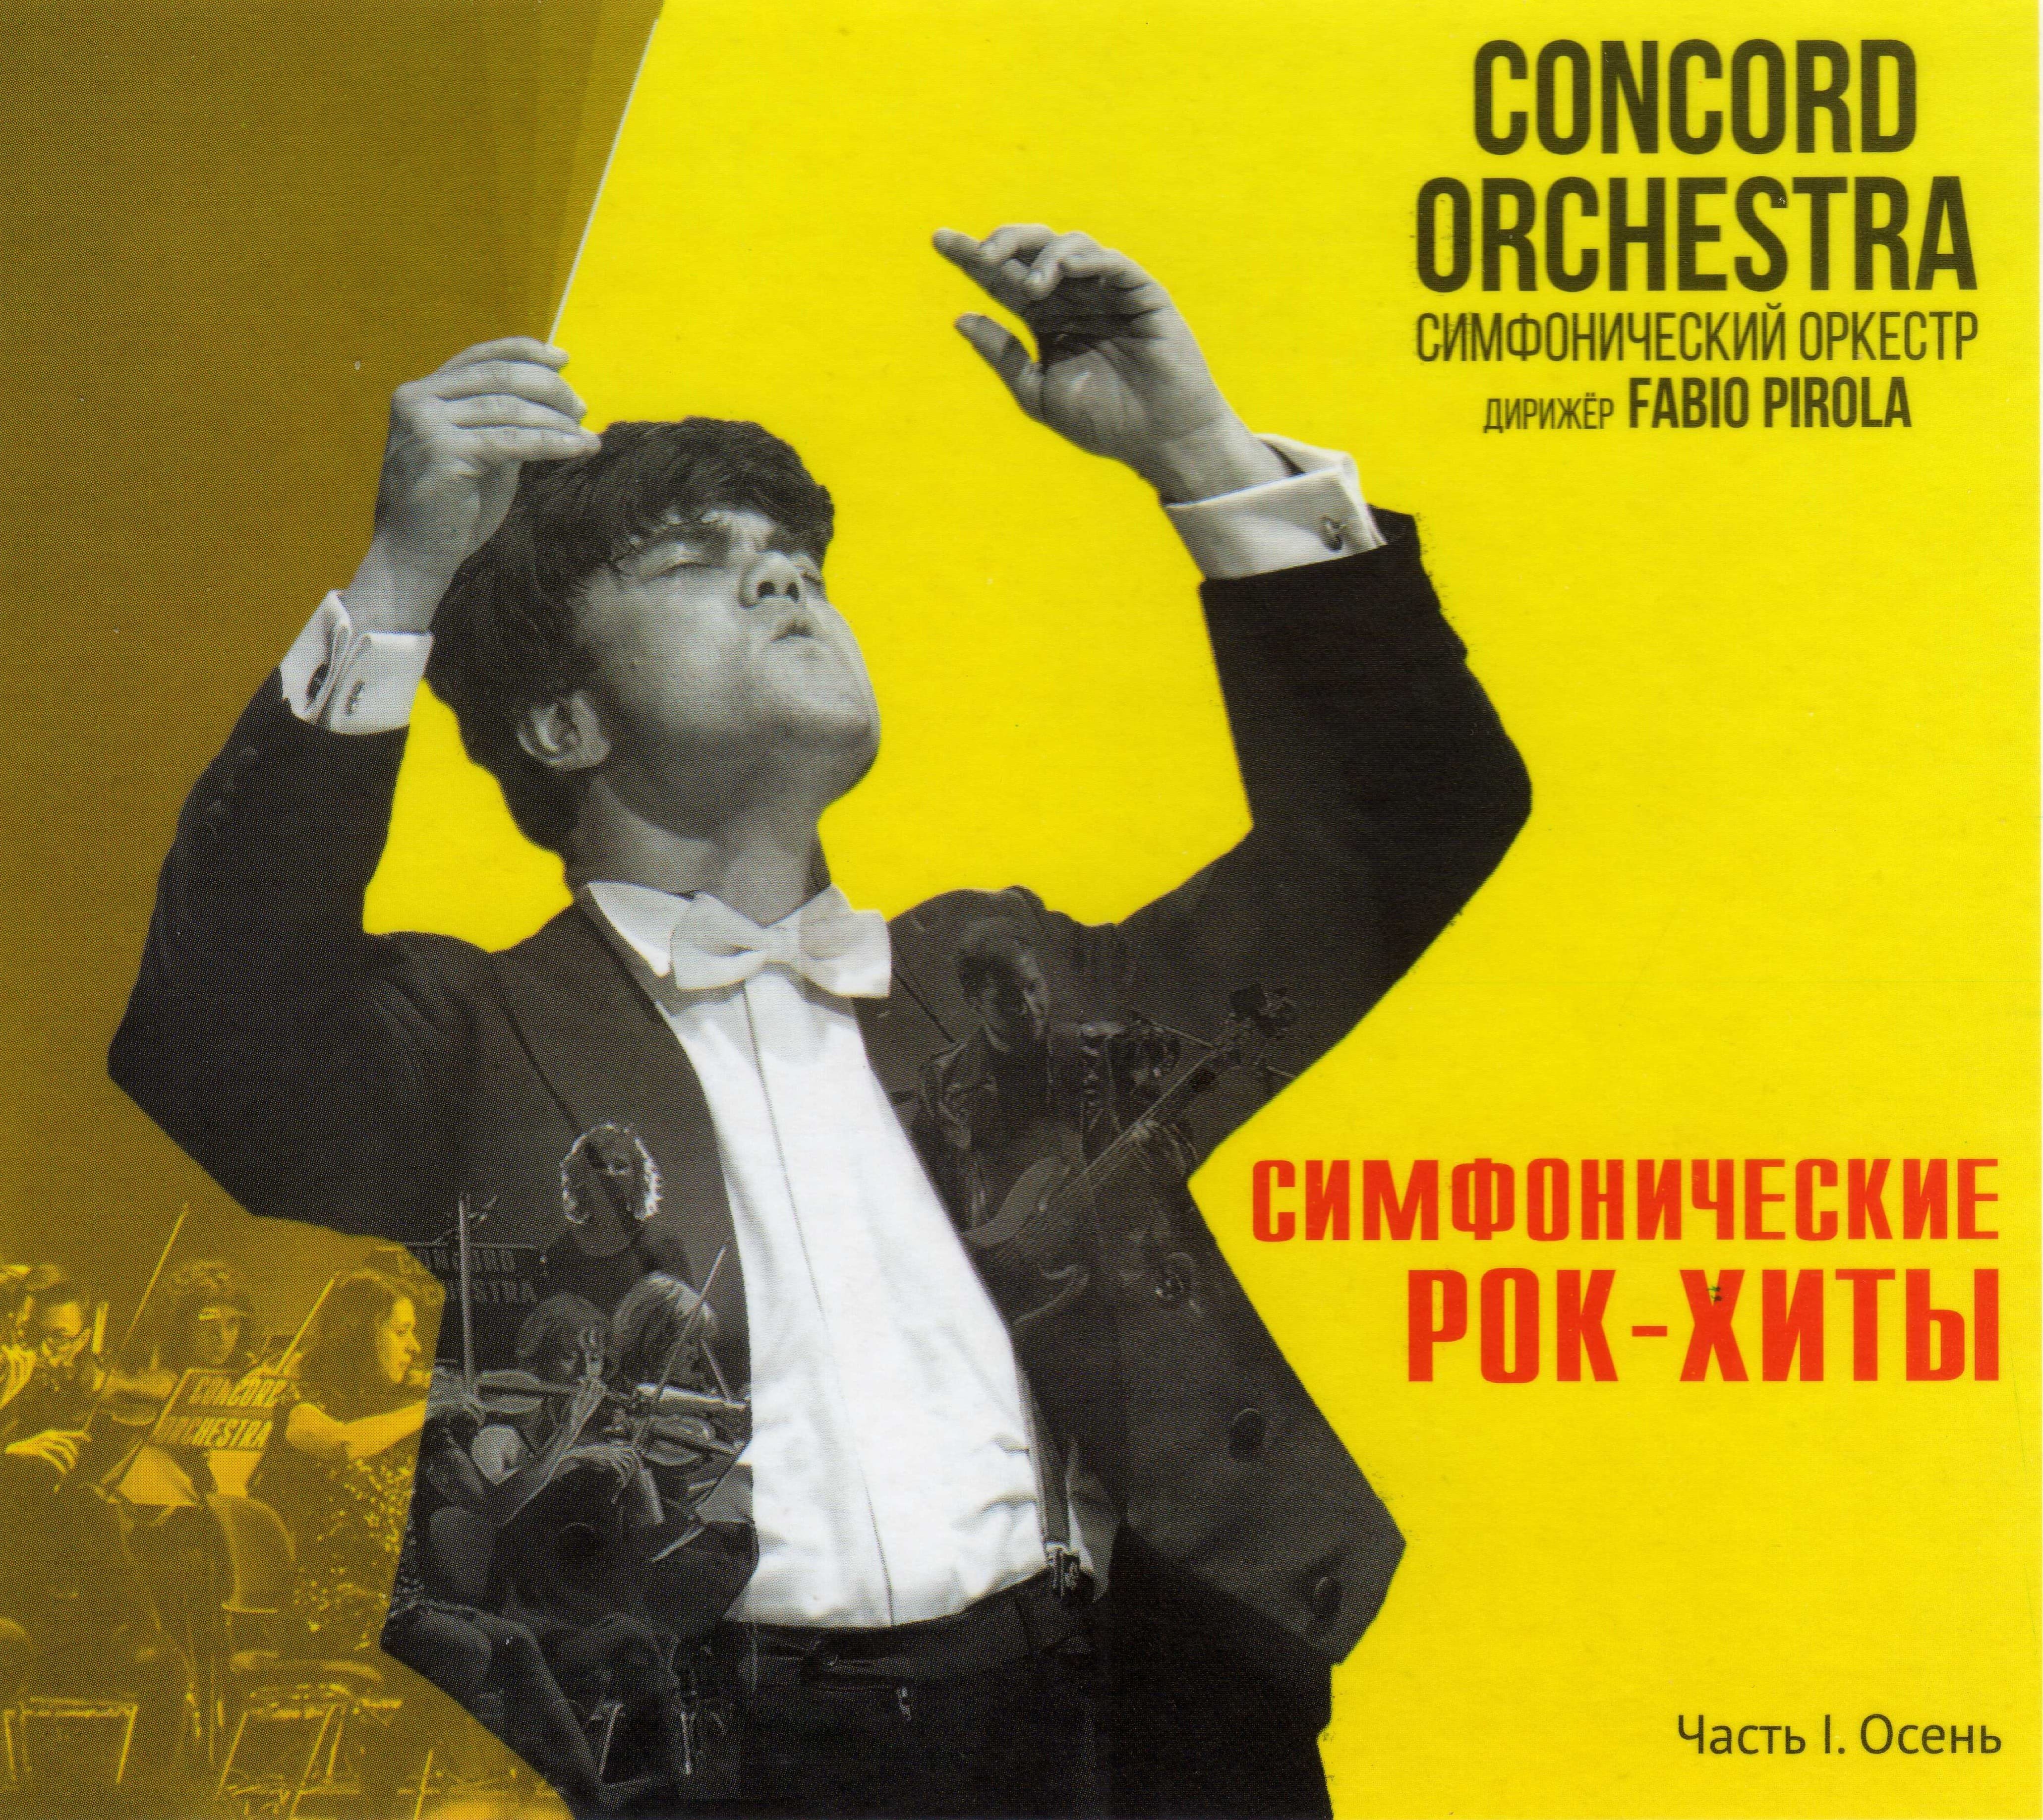 Concord Orchestra. Конкорд симфонический оркестр. Фабио Пирола дирижер. Concord Orchestra Симфонические рок-хиты.